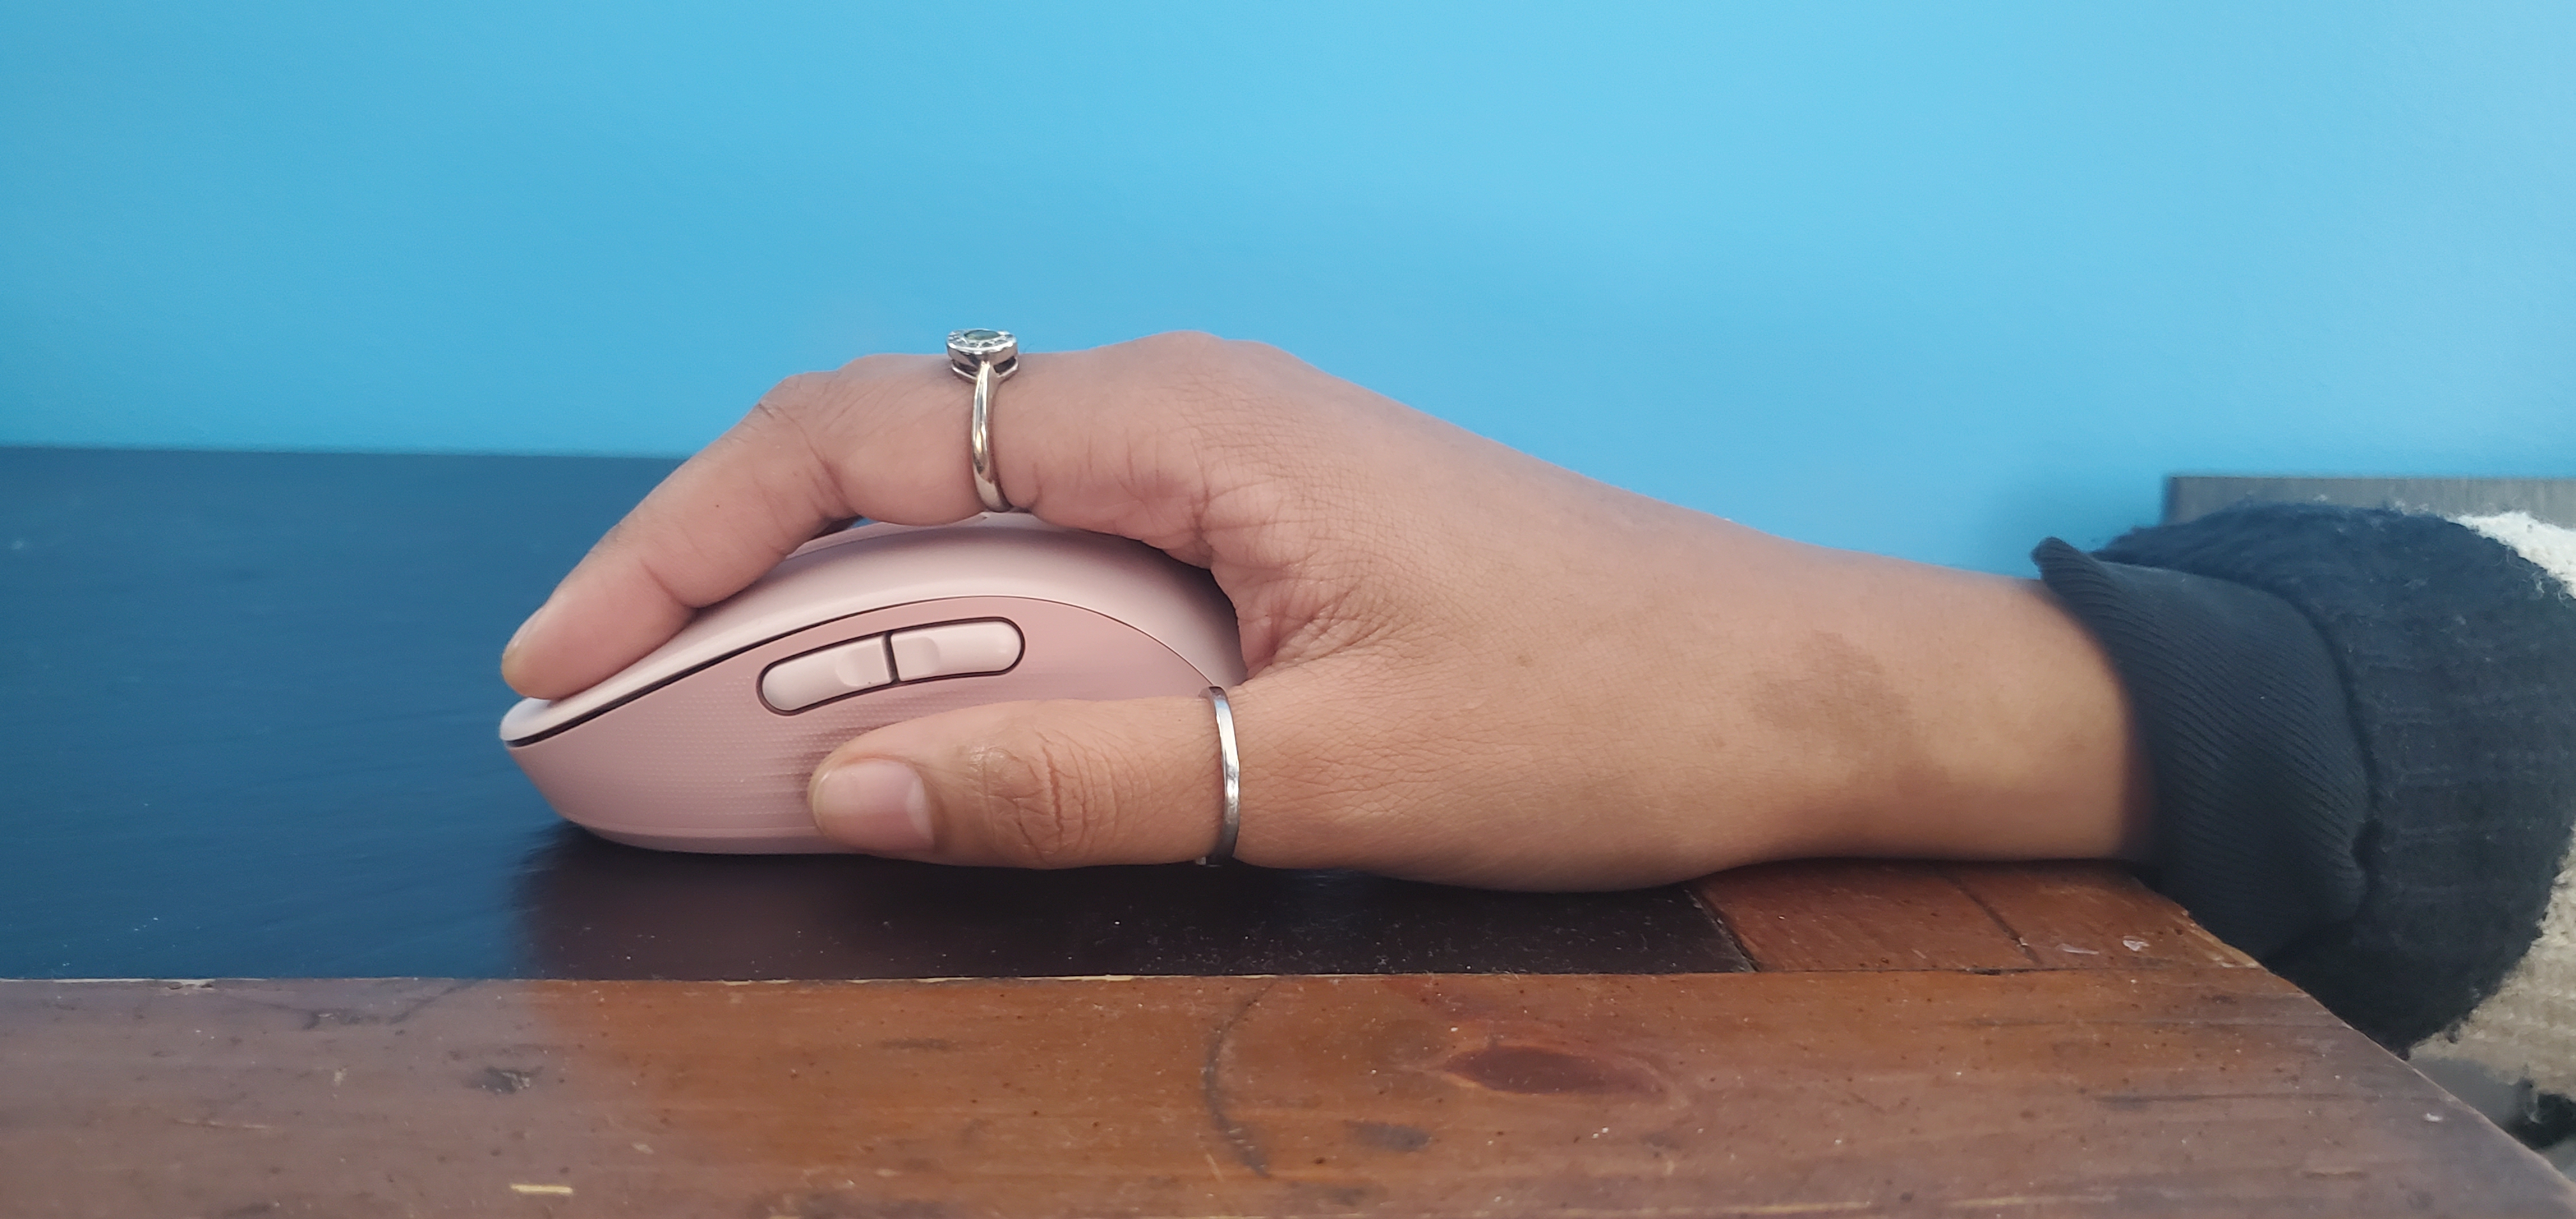 Logitech Signature M650 mouse Review: “Practically silent